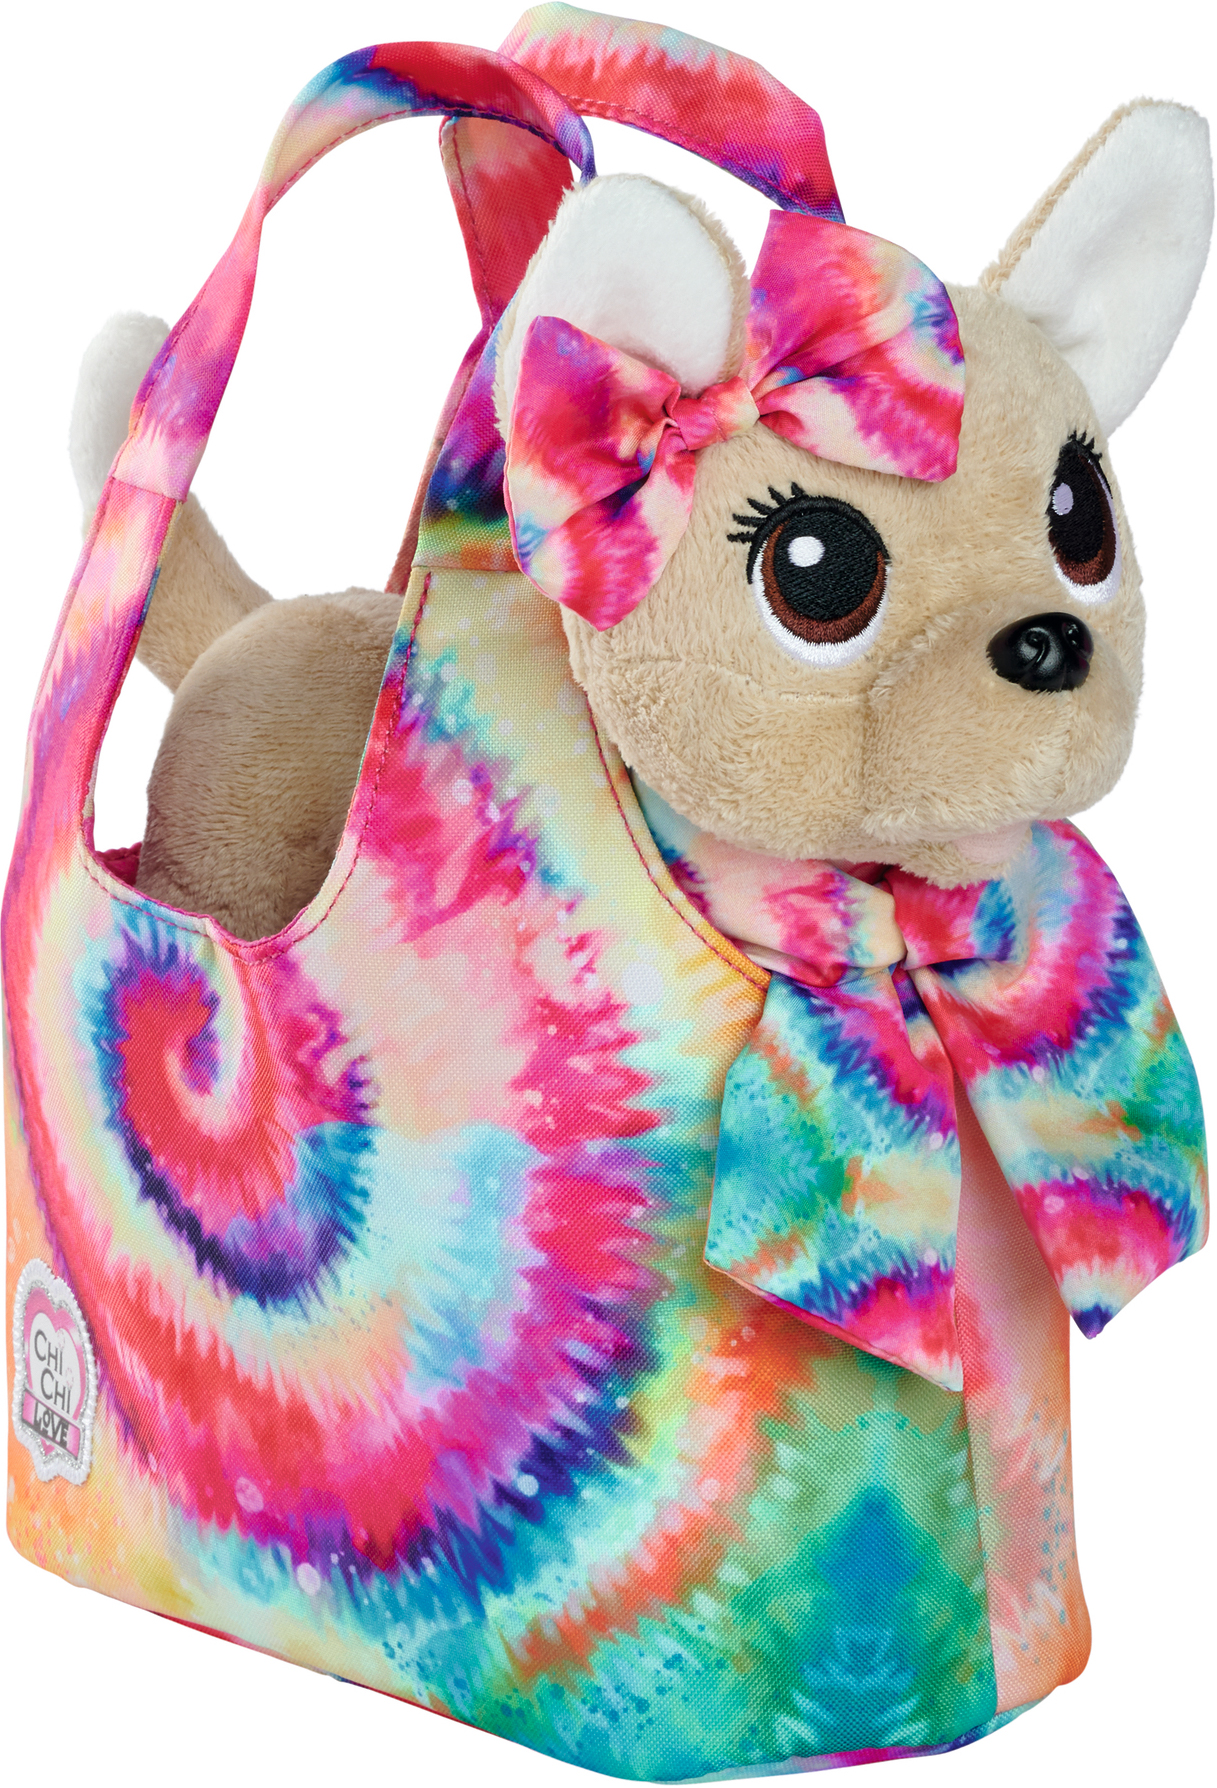 Мягкая игрушка Chi-Chi Love собачка Гламур с сумочкой и бантом 20 см